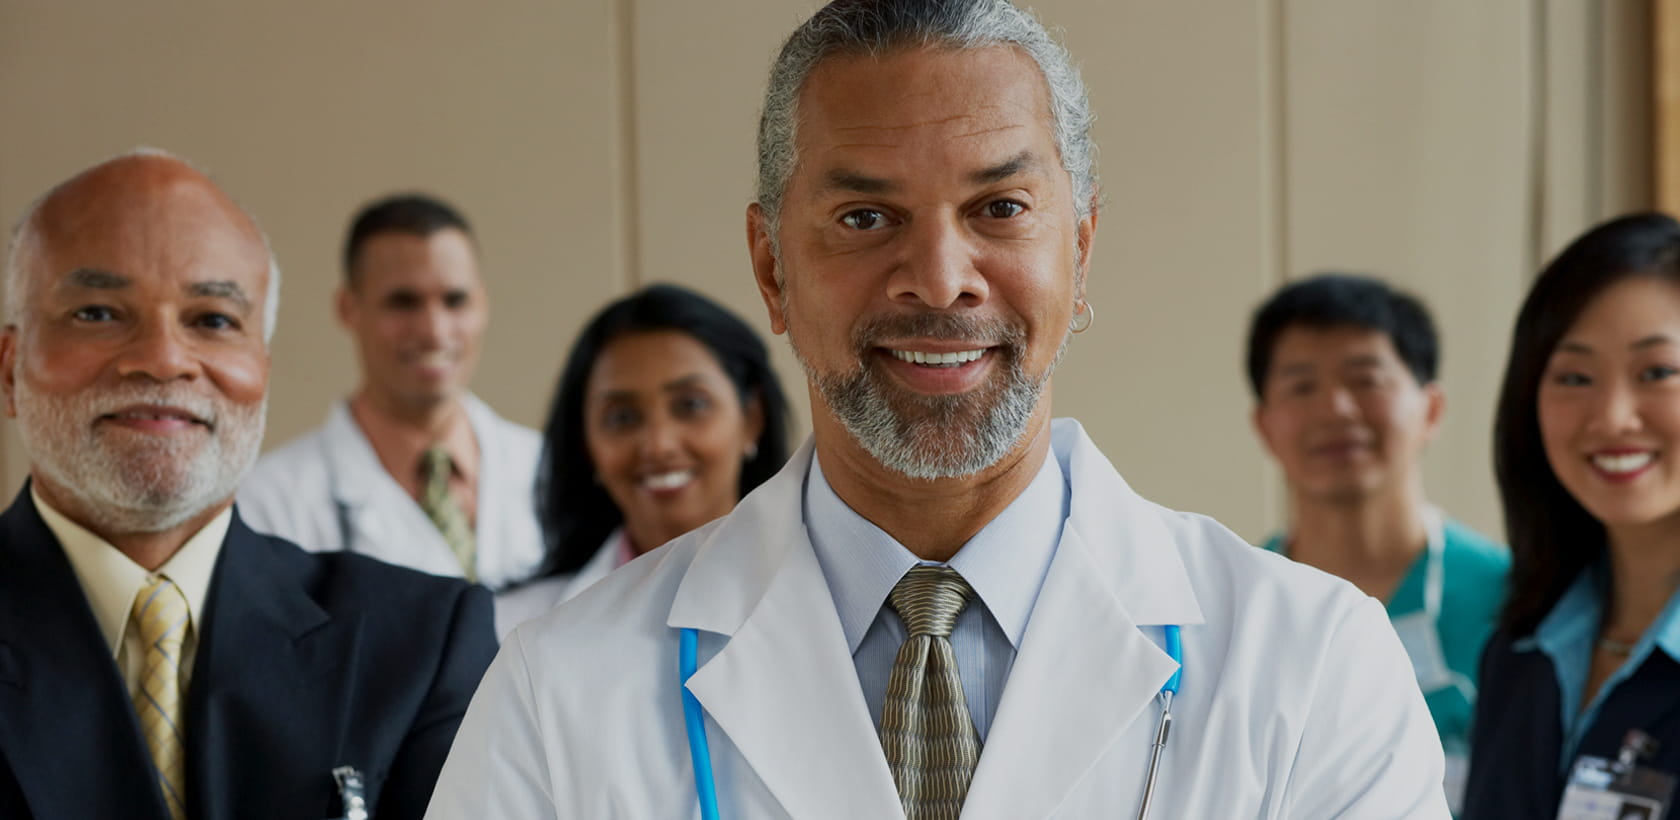 Broward Health's diversity of Medical Professionals